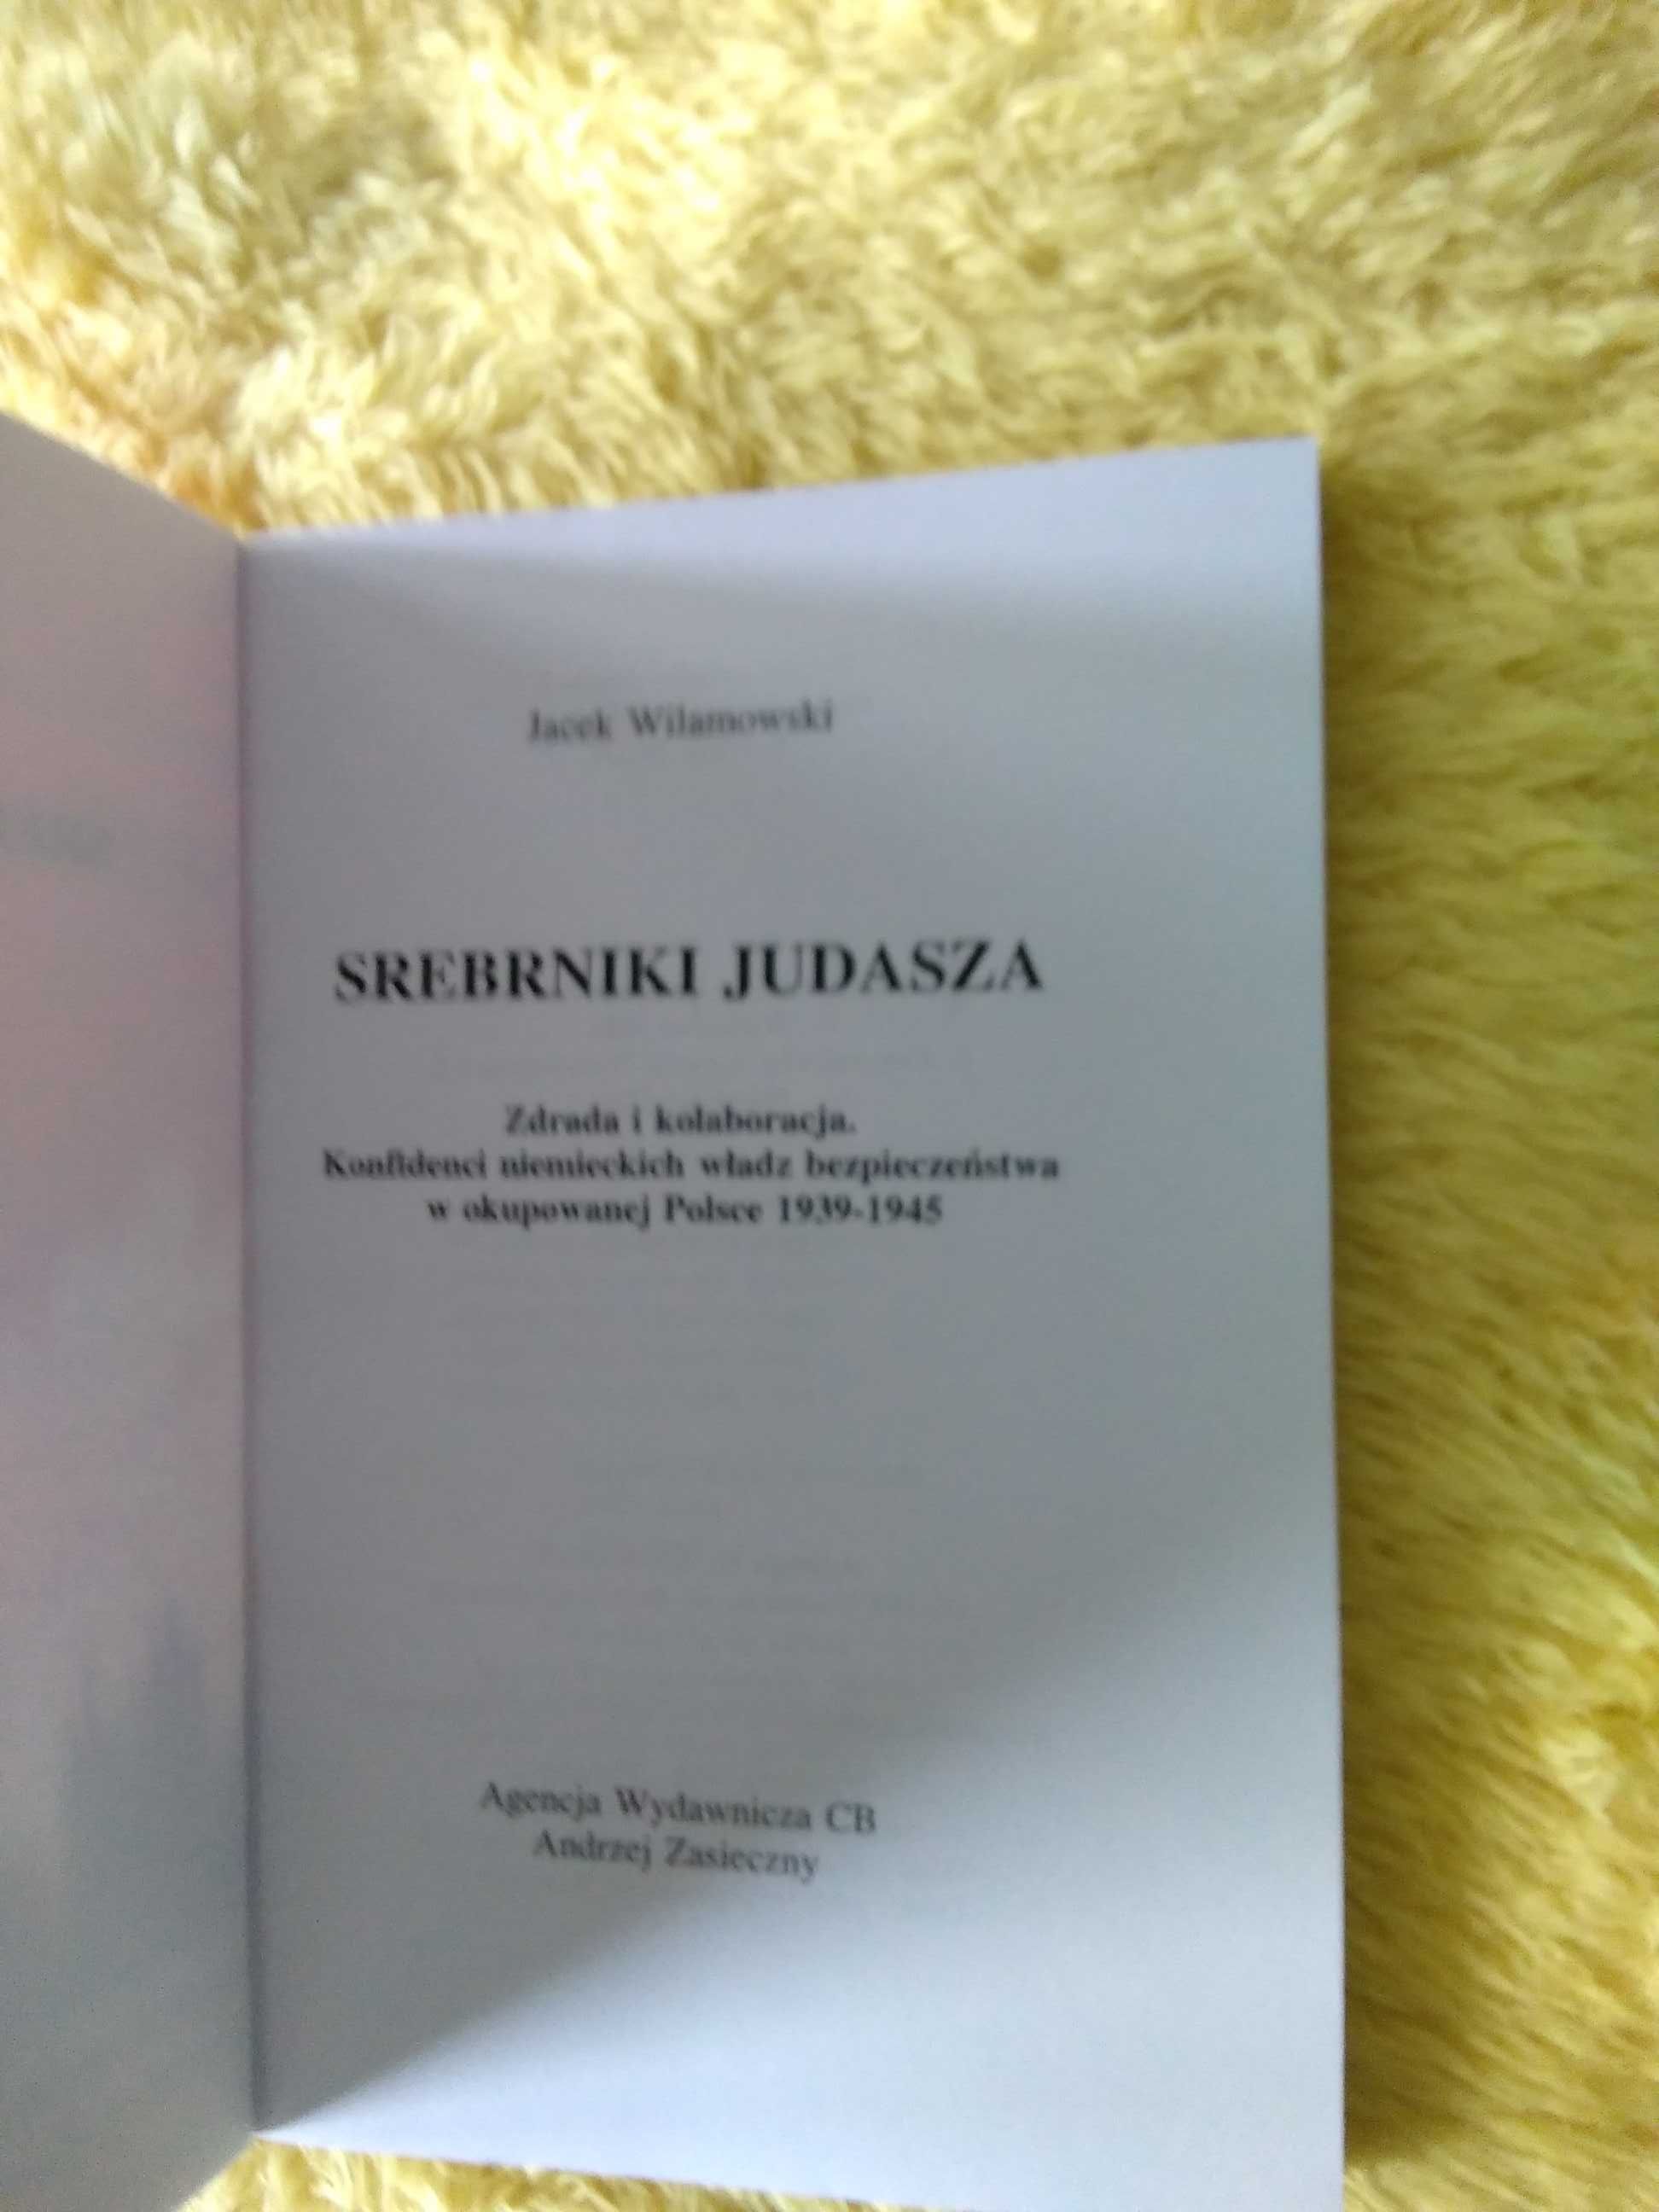 Książka "Srebrniki Judasza".